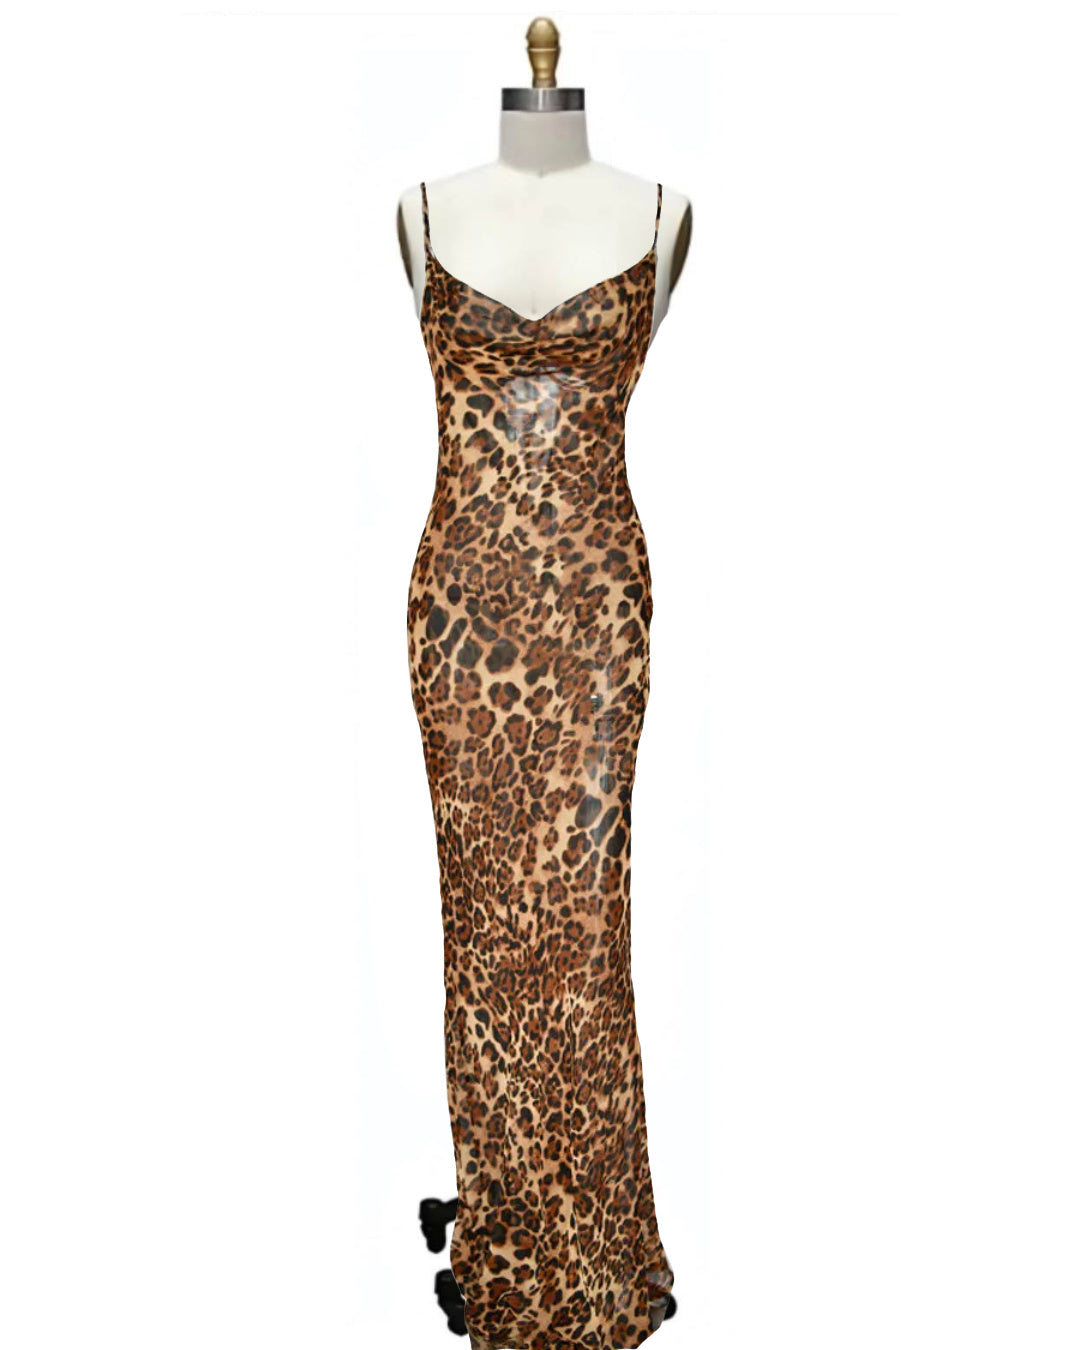 Slink- the Leopard Print Bias Cut Satin Slip Dress 3 Color Ways